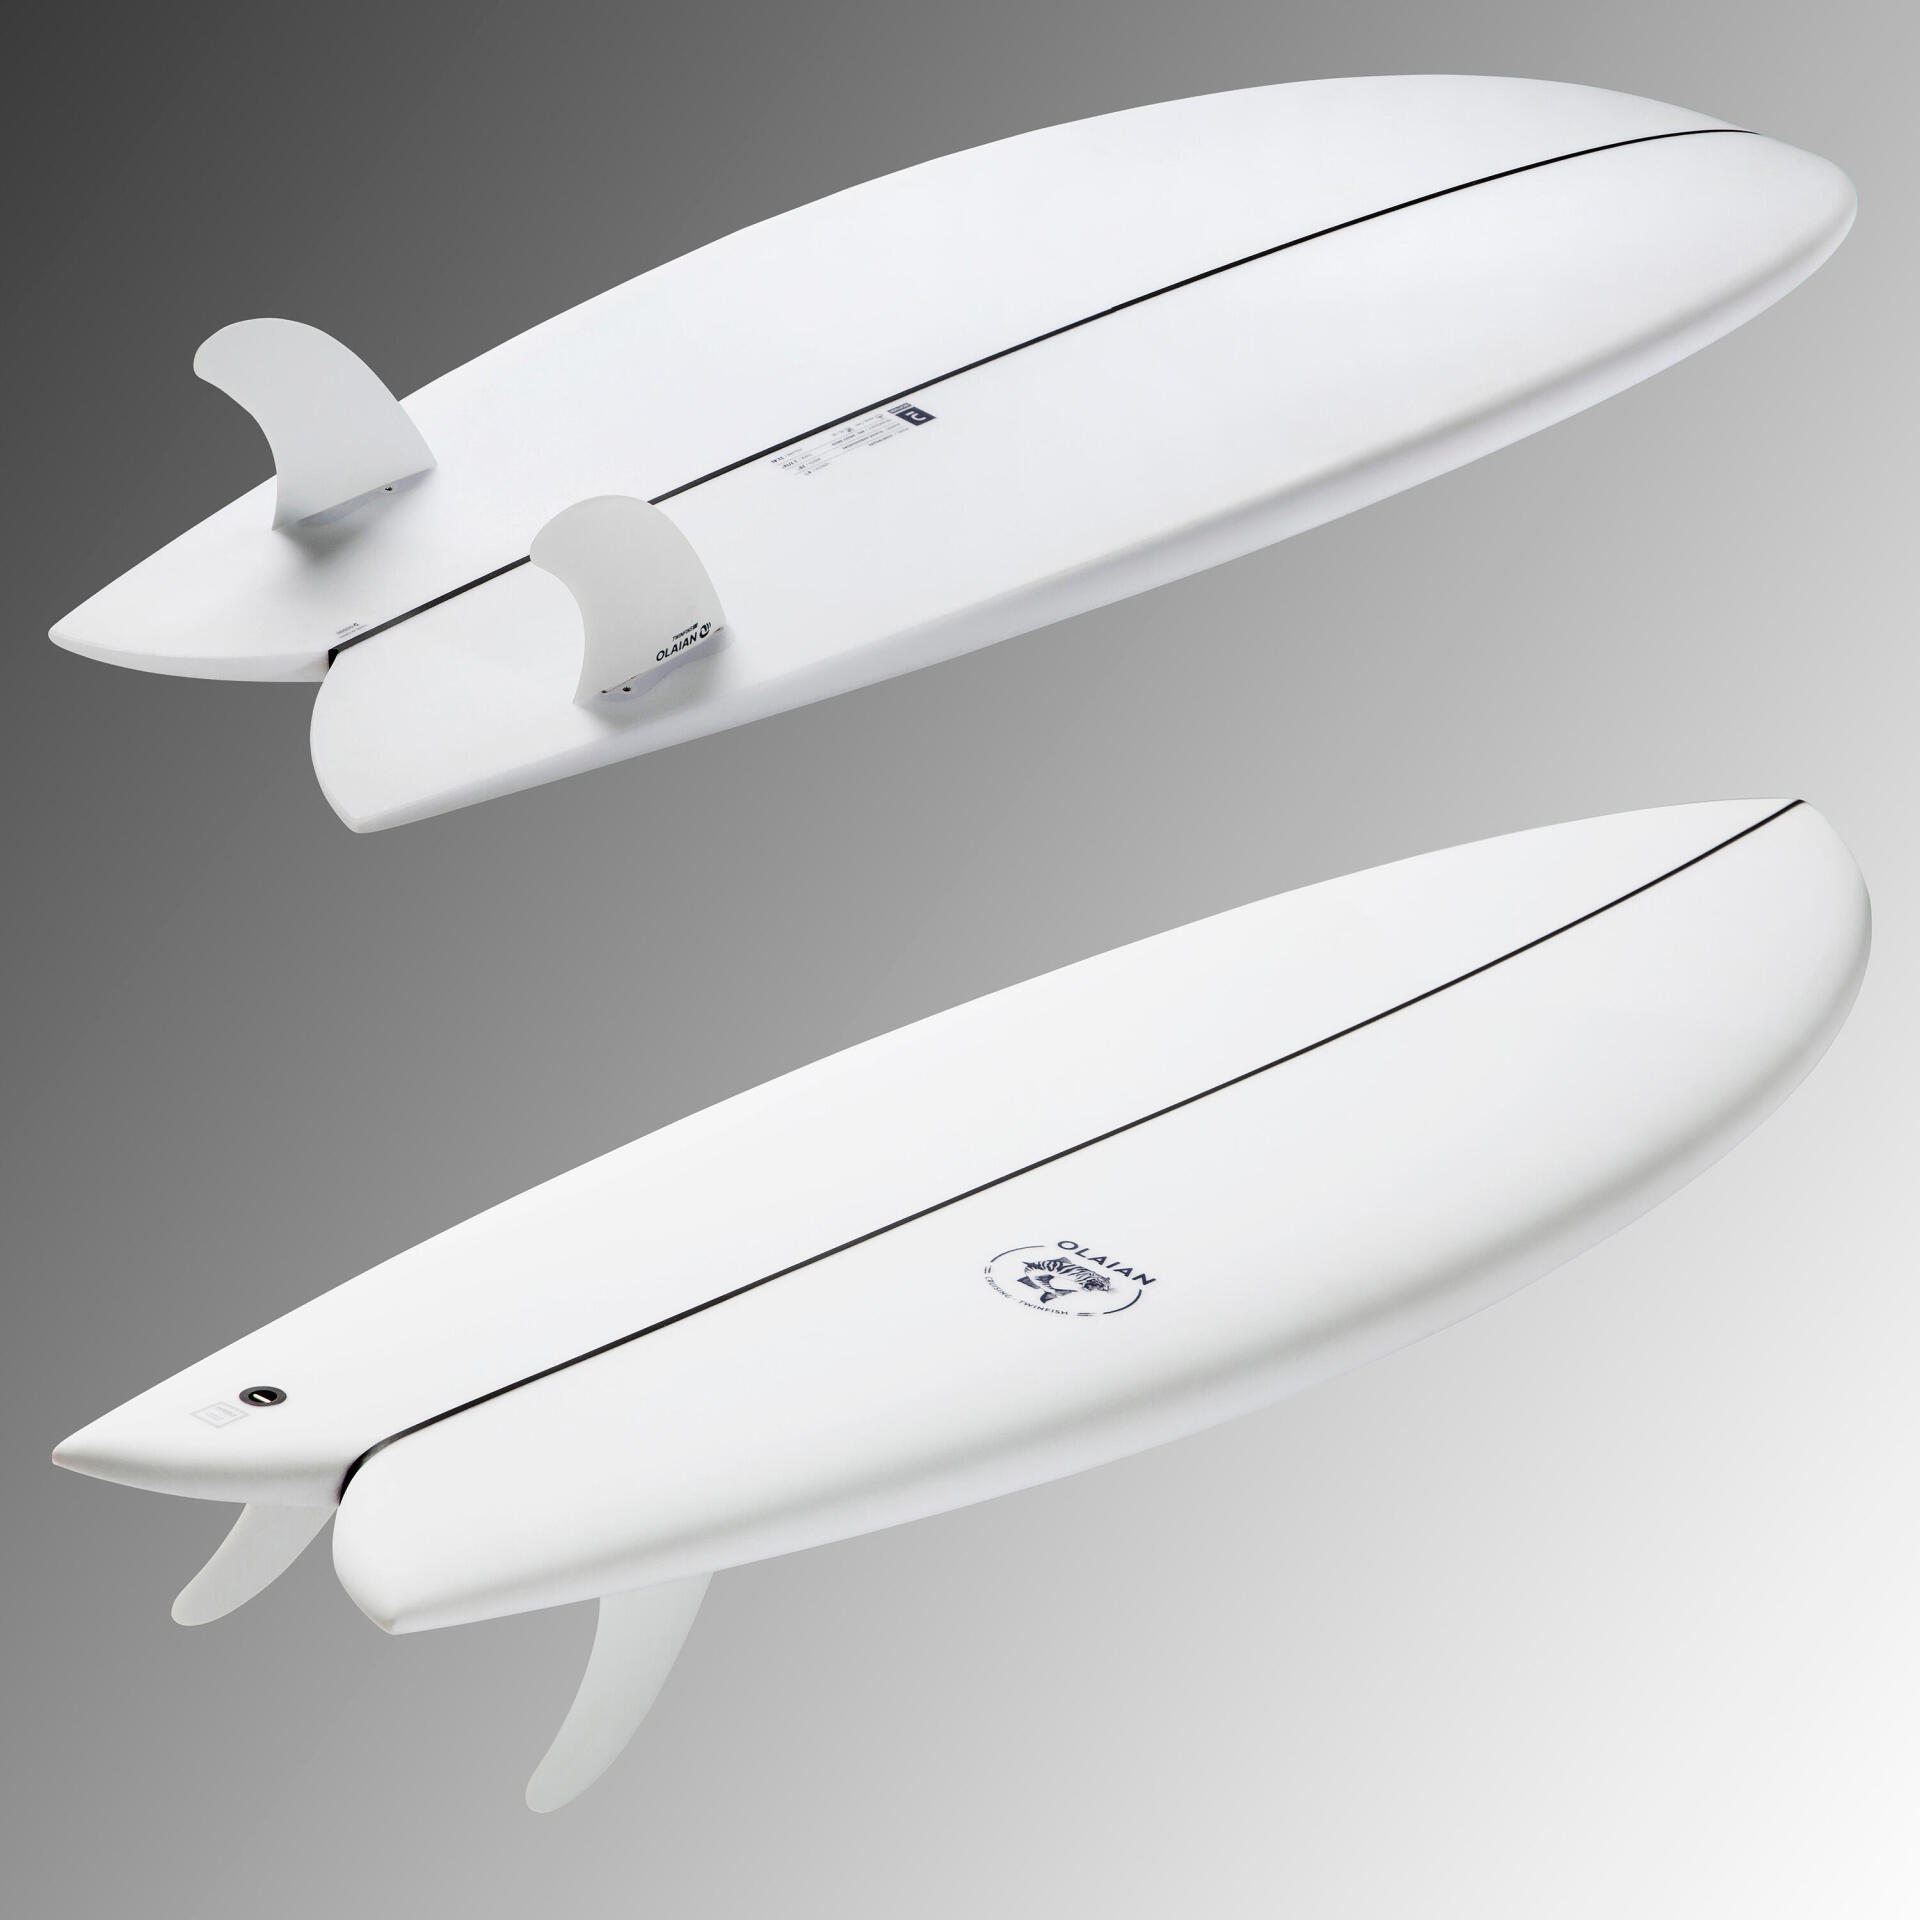 Olaian Twin Fish surfboard